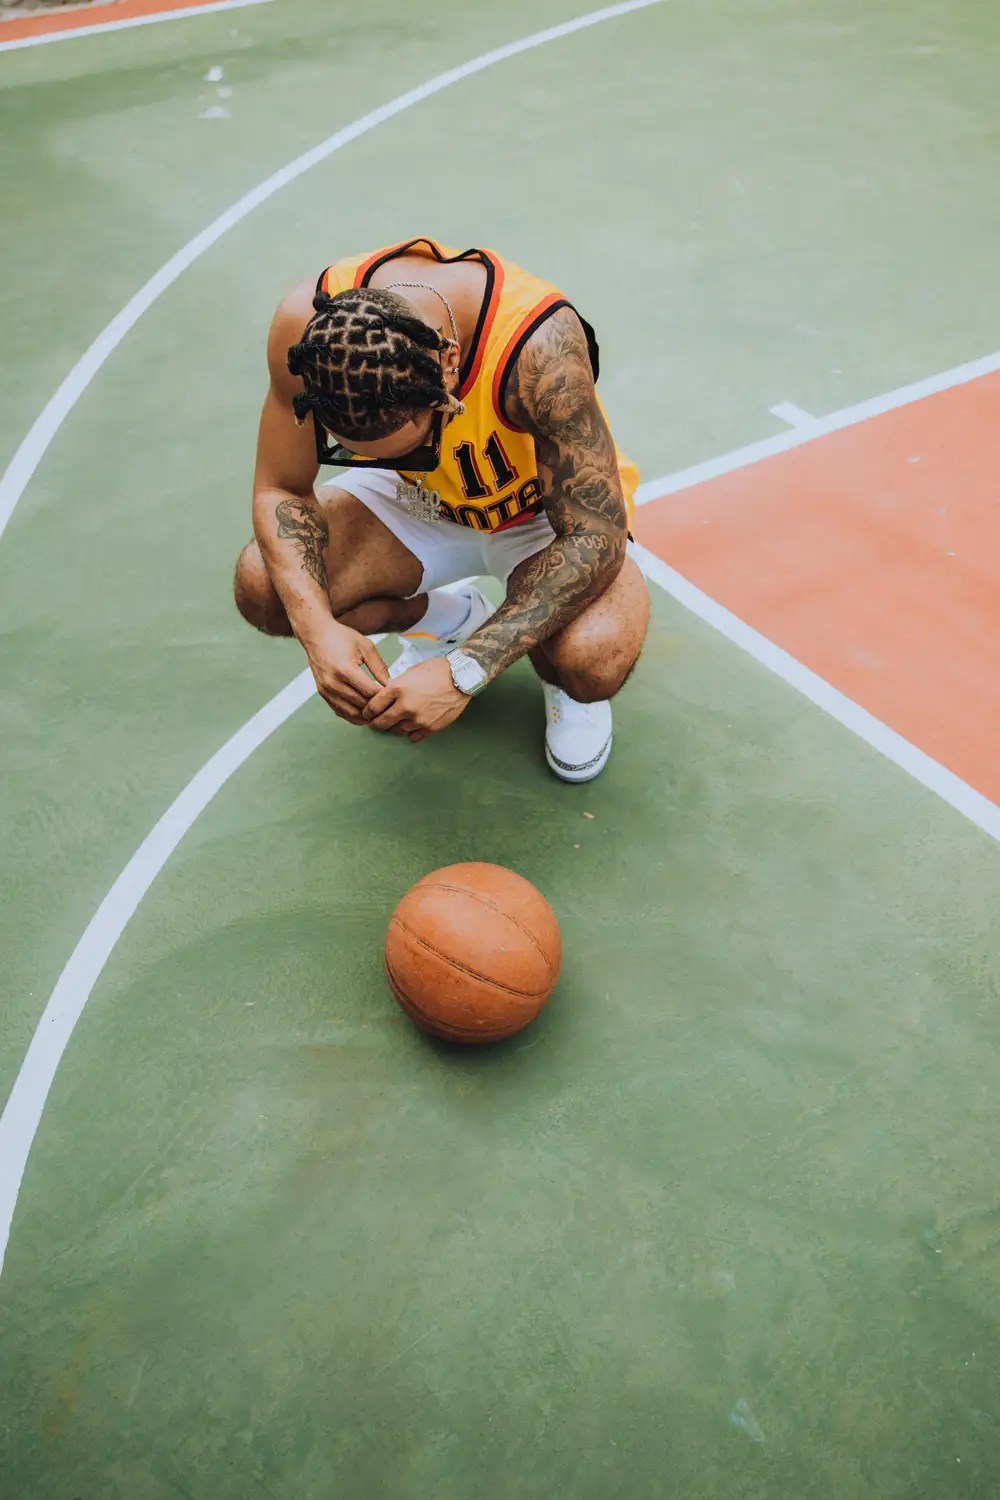 Man on a Basketball Court